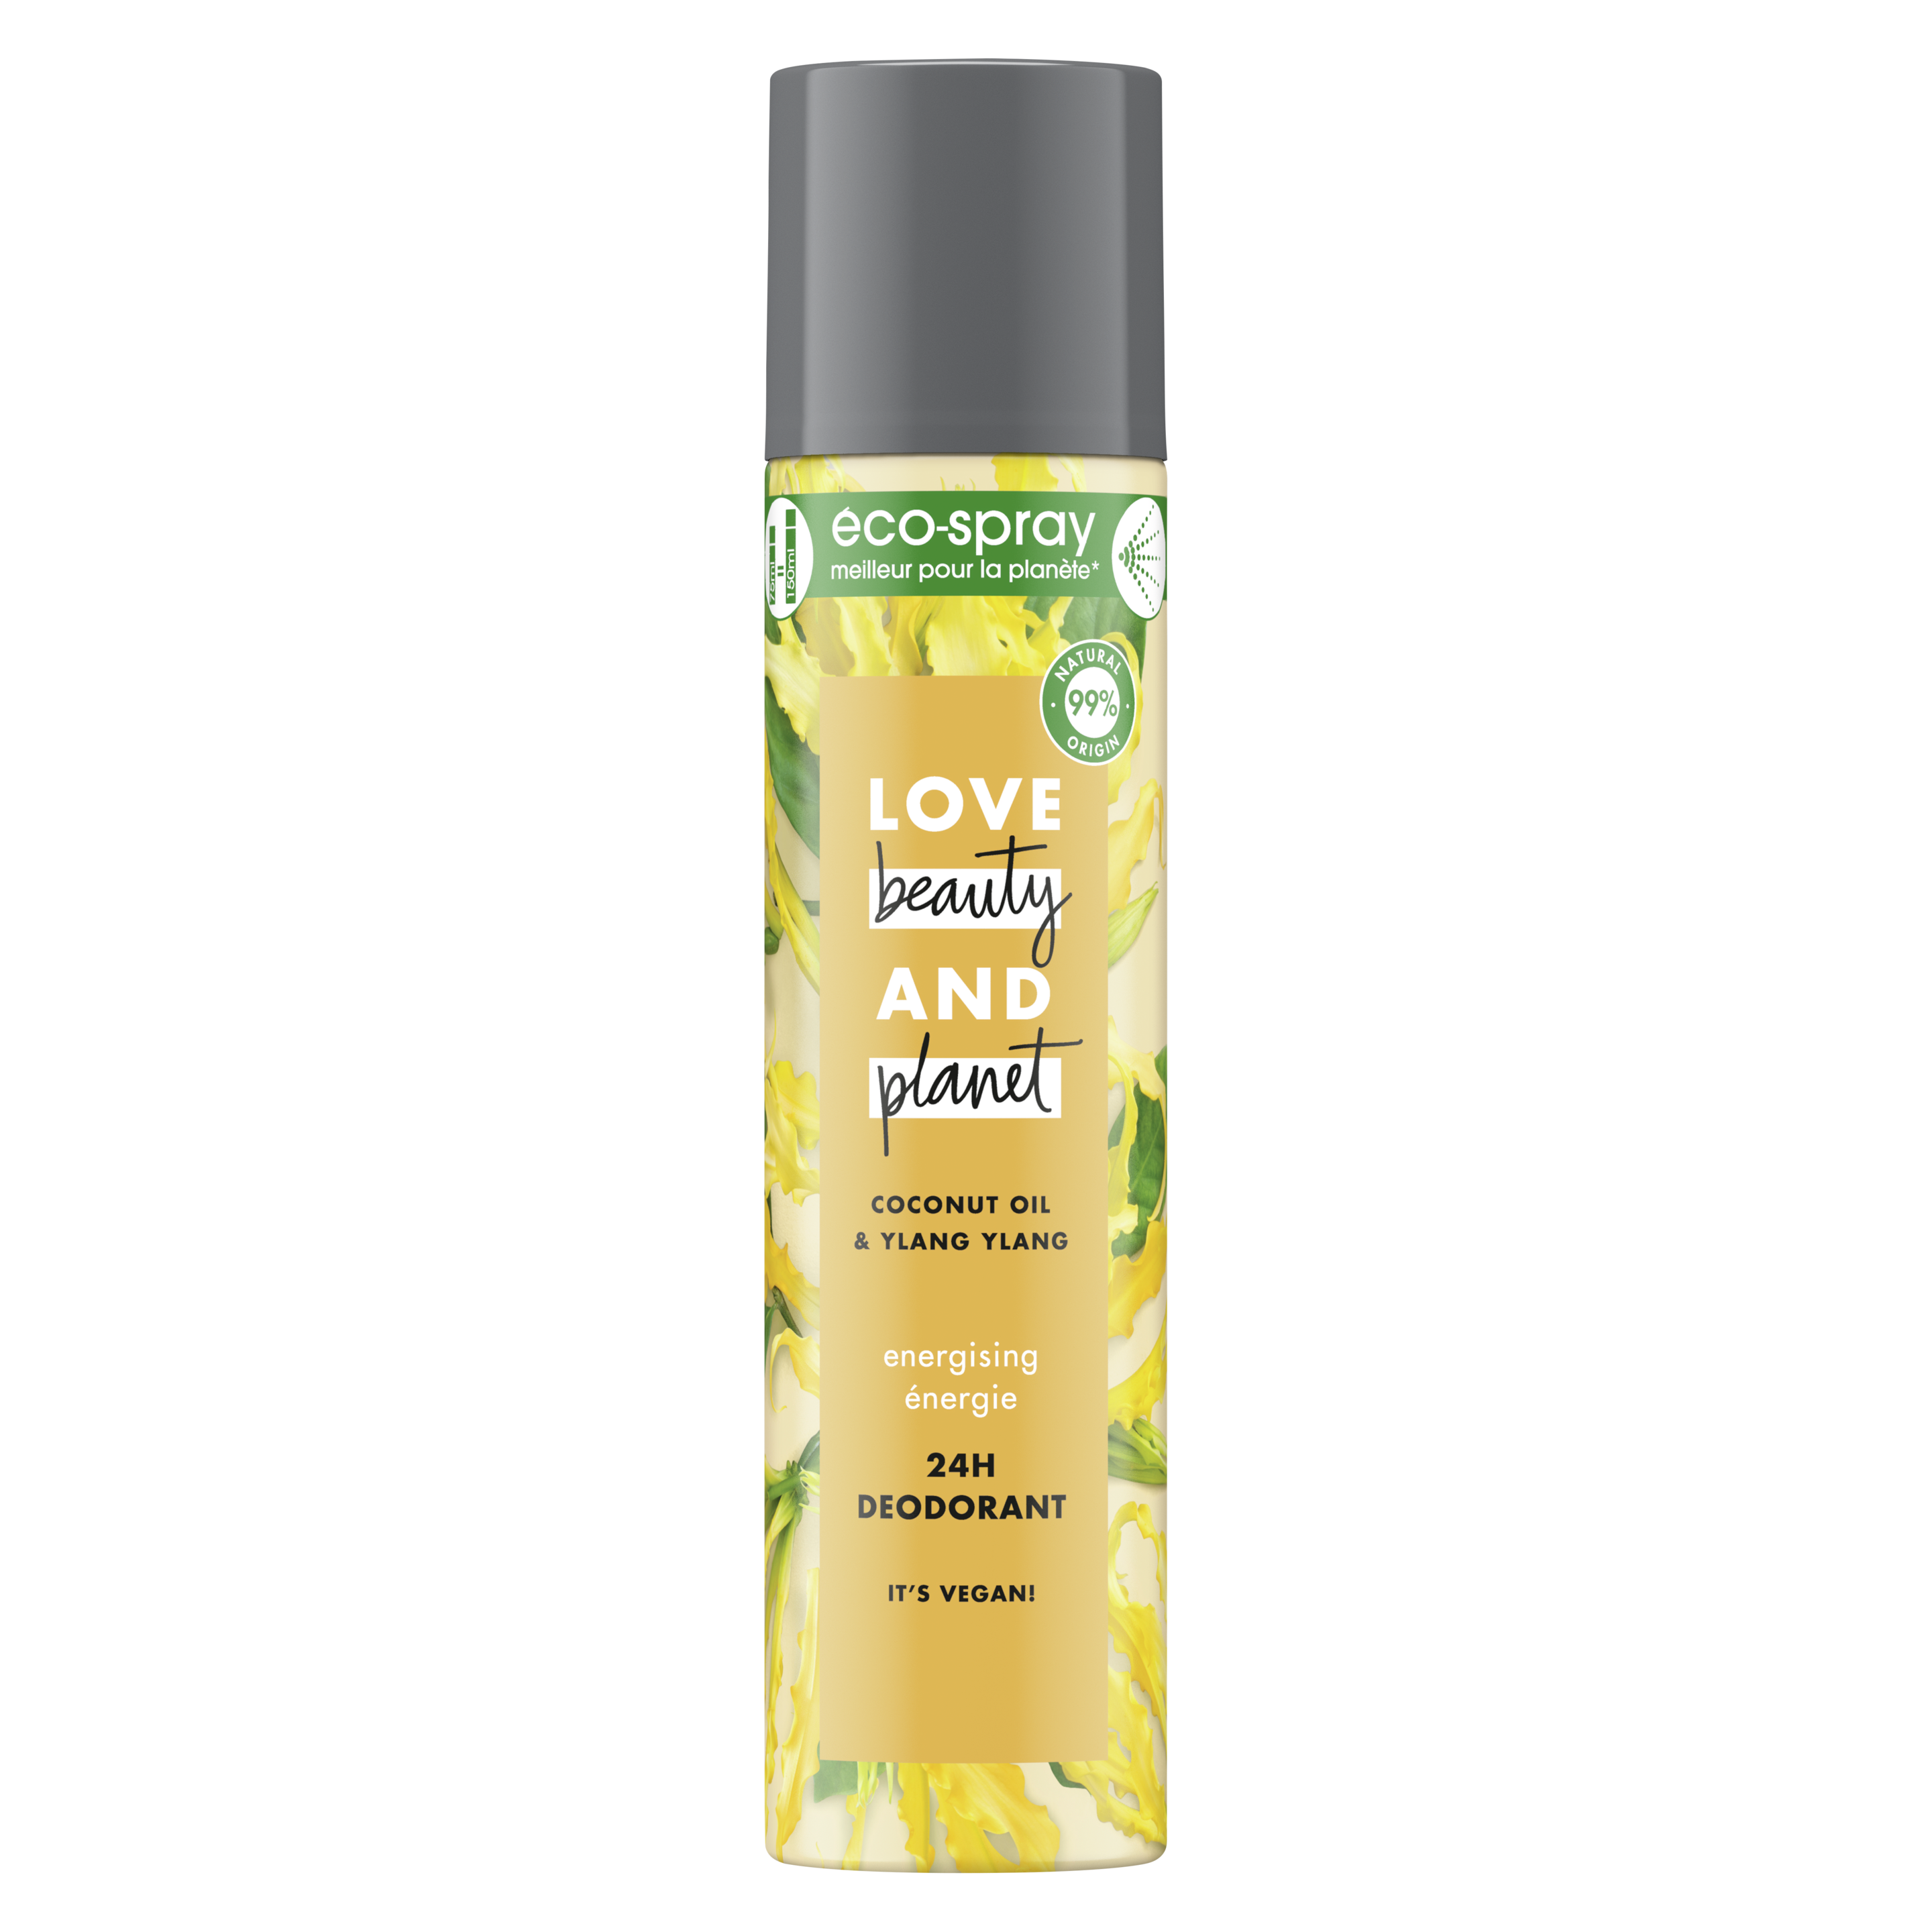 Voorkant verpakking Love Beauty and Planet Coconut Oil & Ylang Ylang Deodorant verrijkt met kokosolie en ylang ylang Energizing Eco-spray